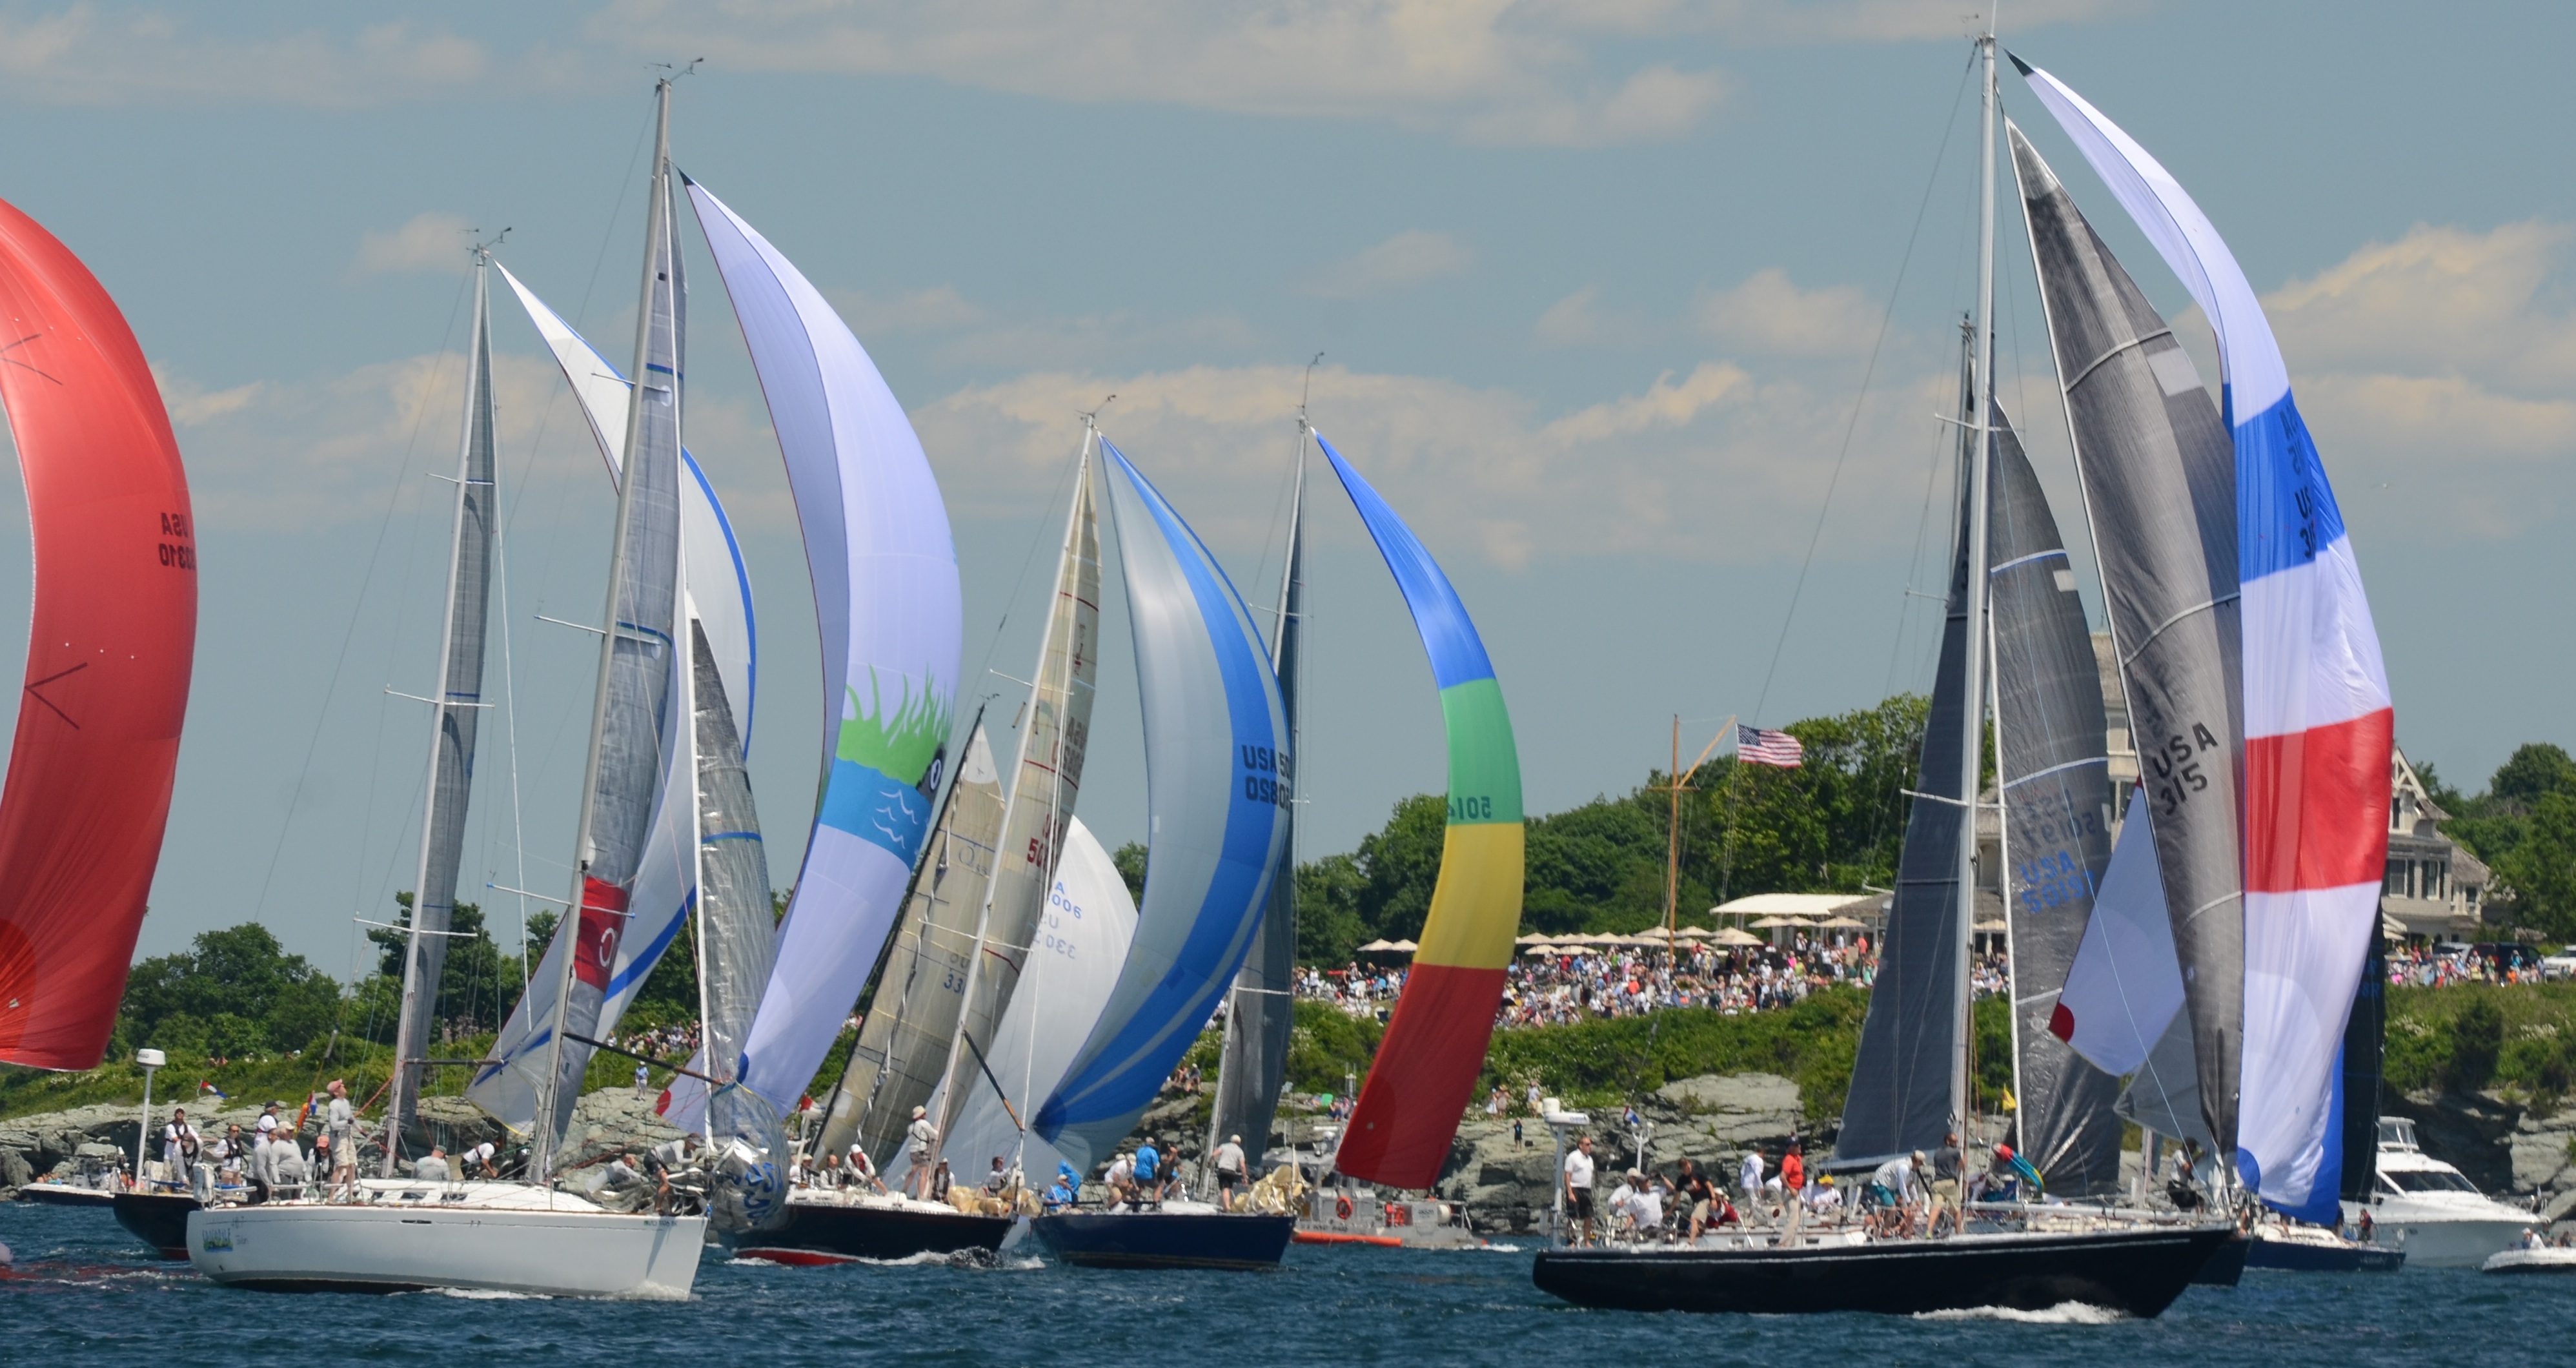 The 51st Annual Newport Bermuda Race